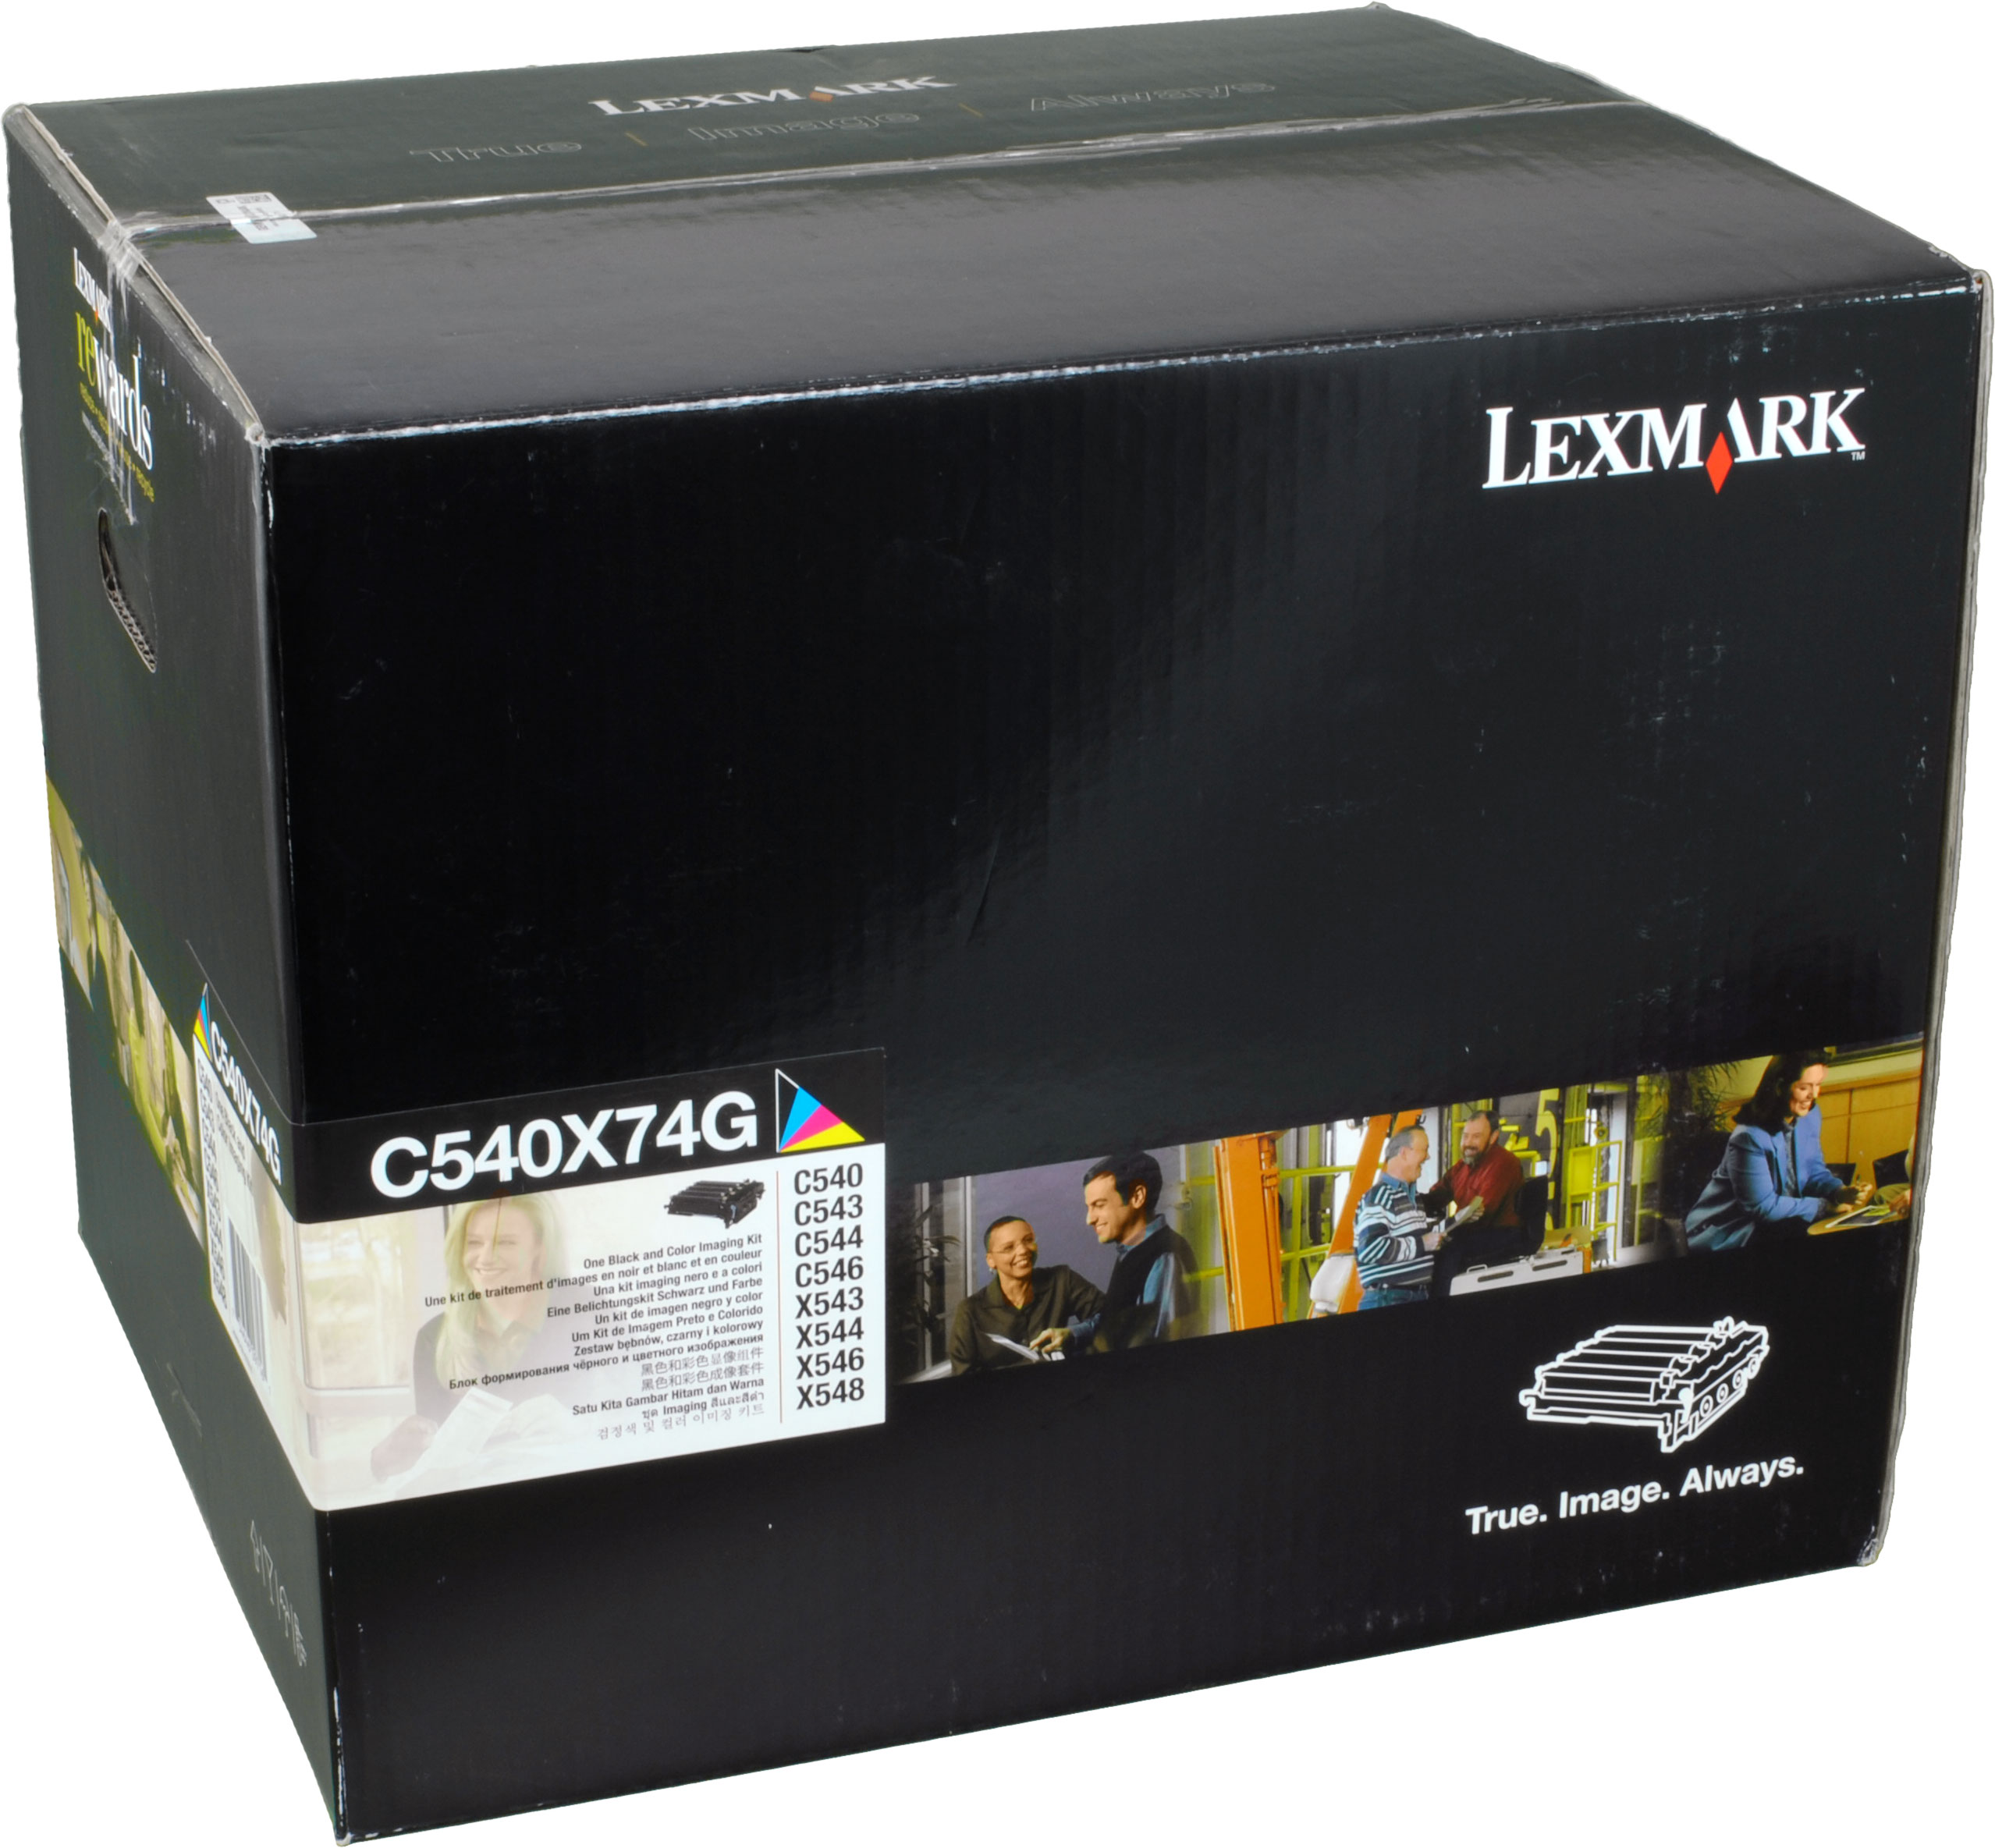 LEXMARK C540X74G Trommel cyan, schwarz, magenta, yellow